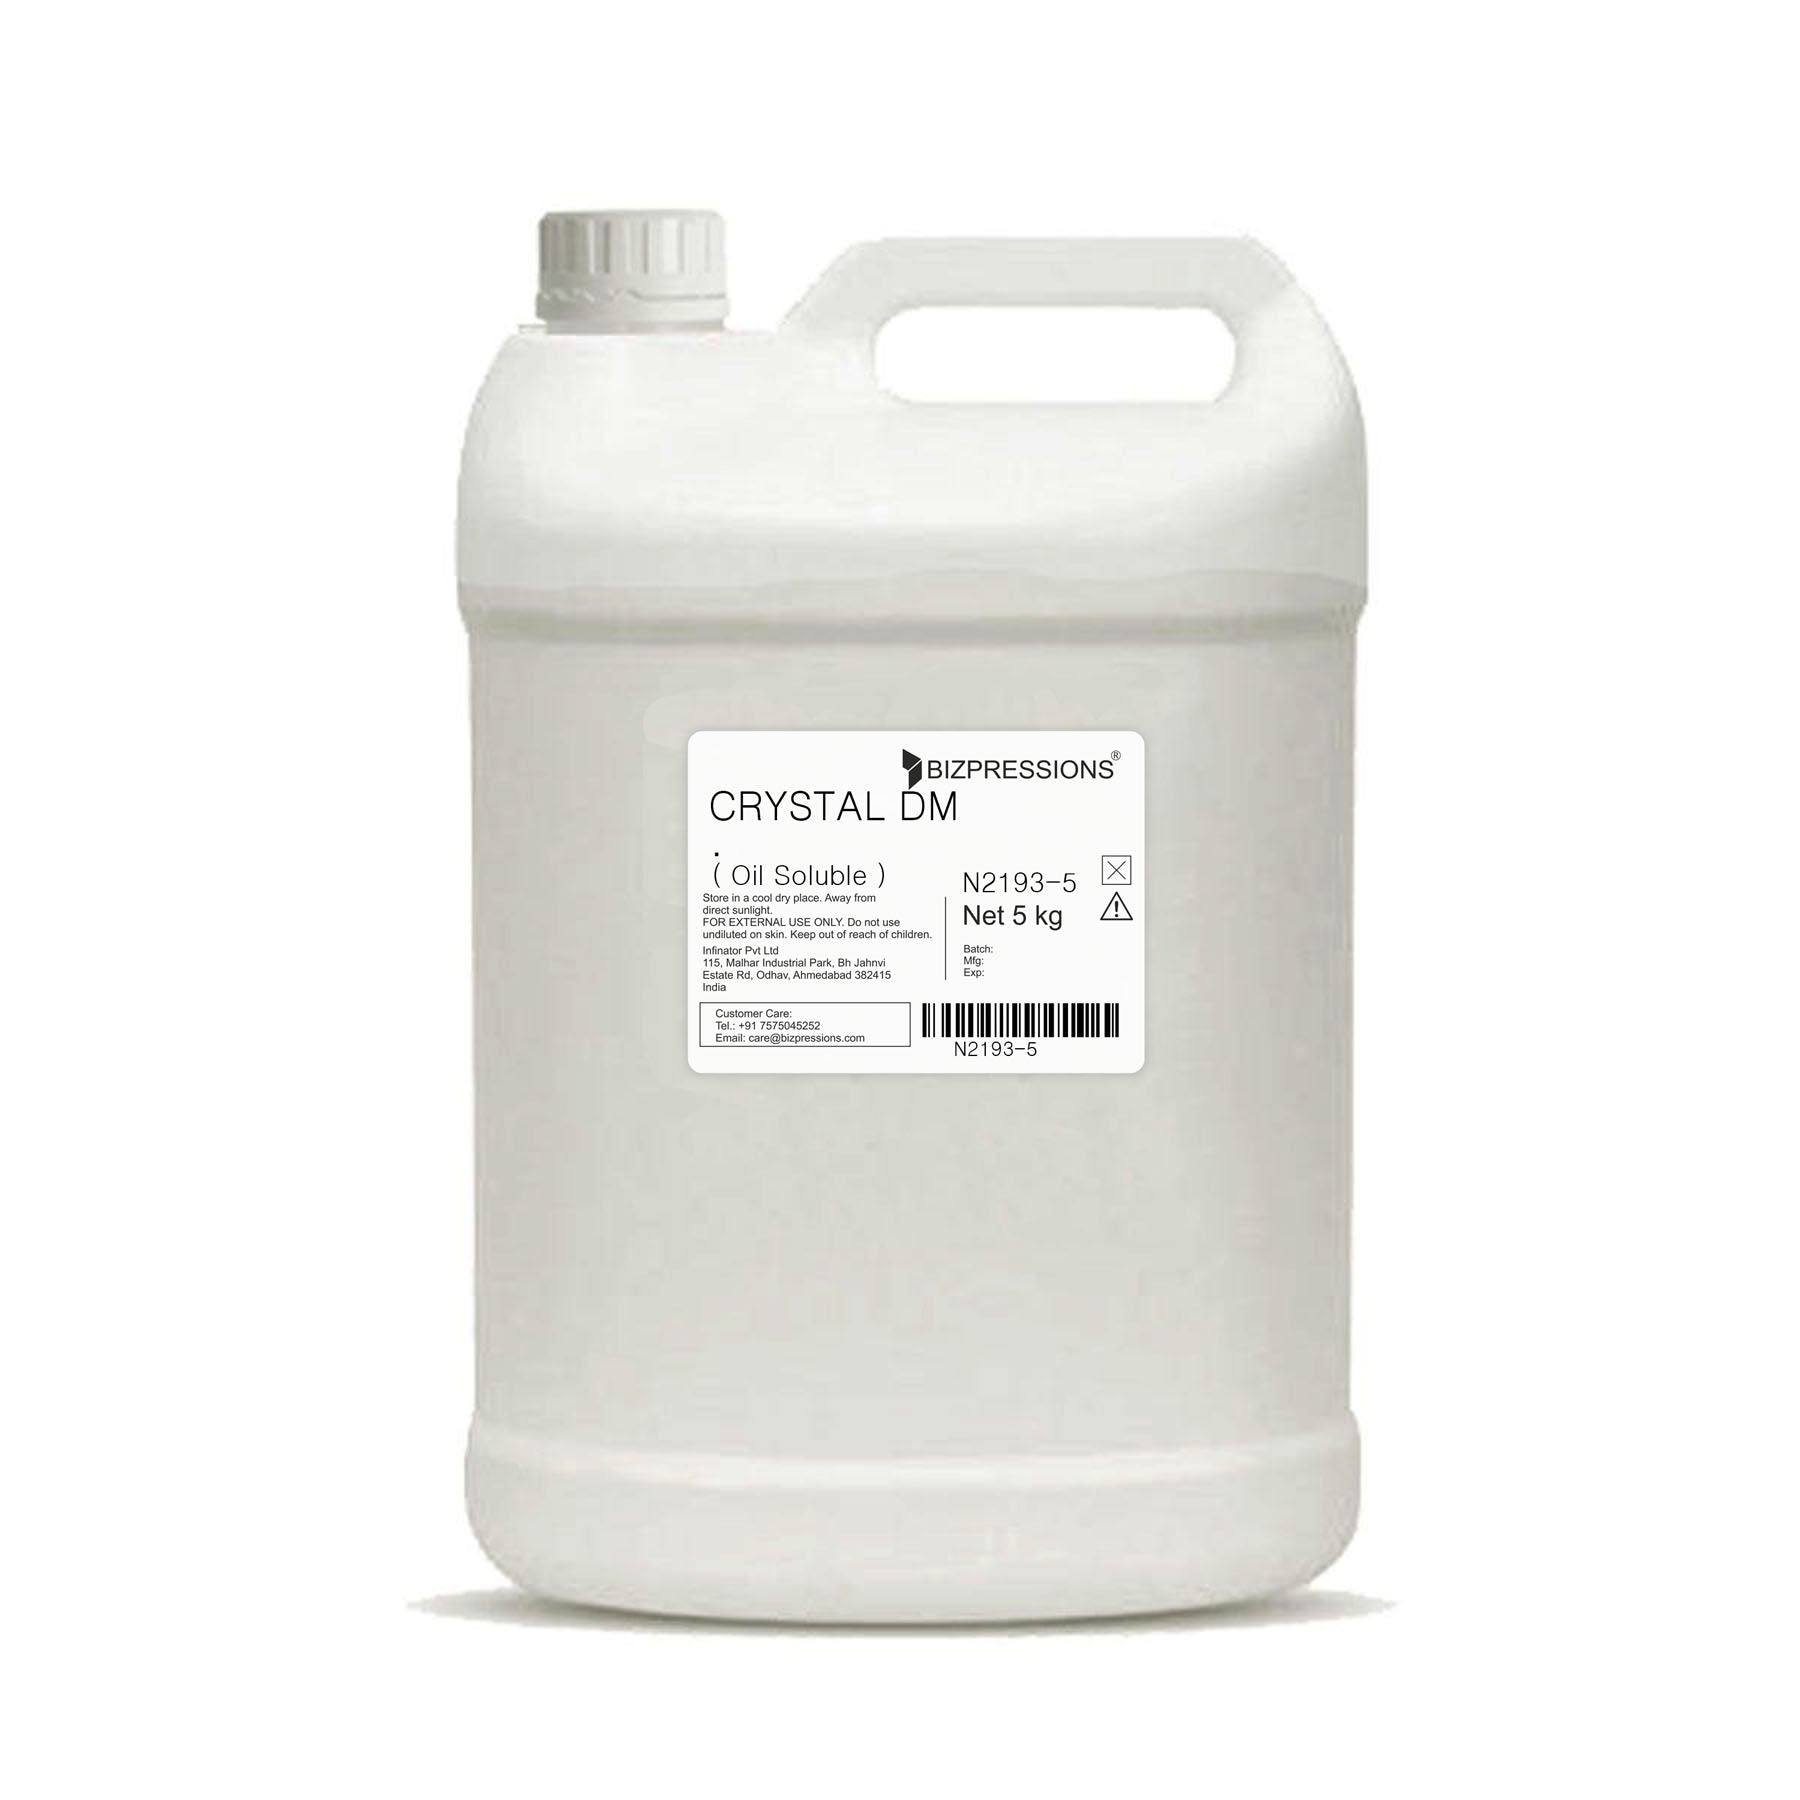 CRYSTAL DM - Fragrance ( Oil Soluble ) - 5 kg